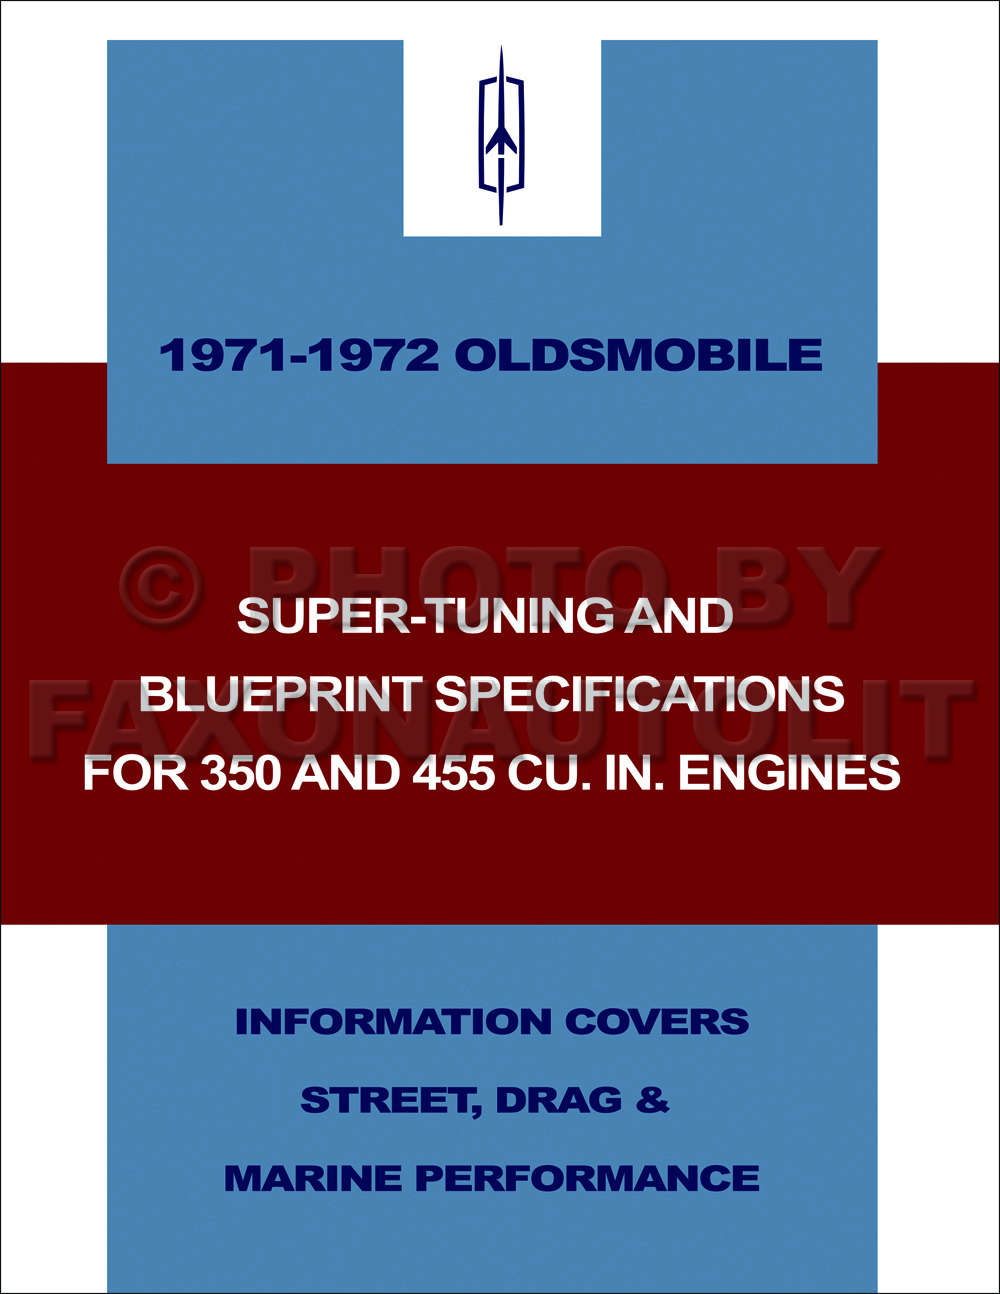 1971-1972 Oldsmobile Super Tuning Blueprinting Manual 350 & 455 Cu. In. Engines